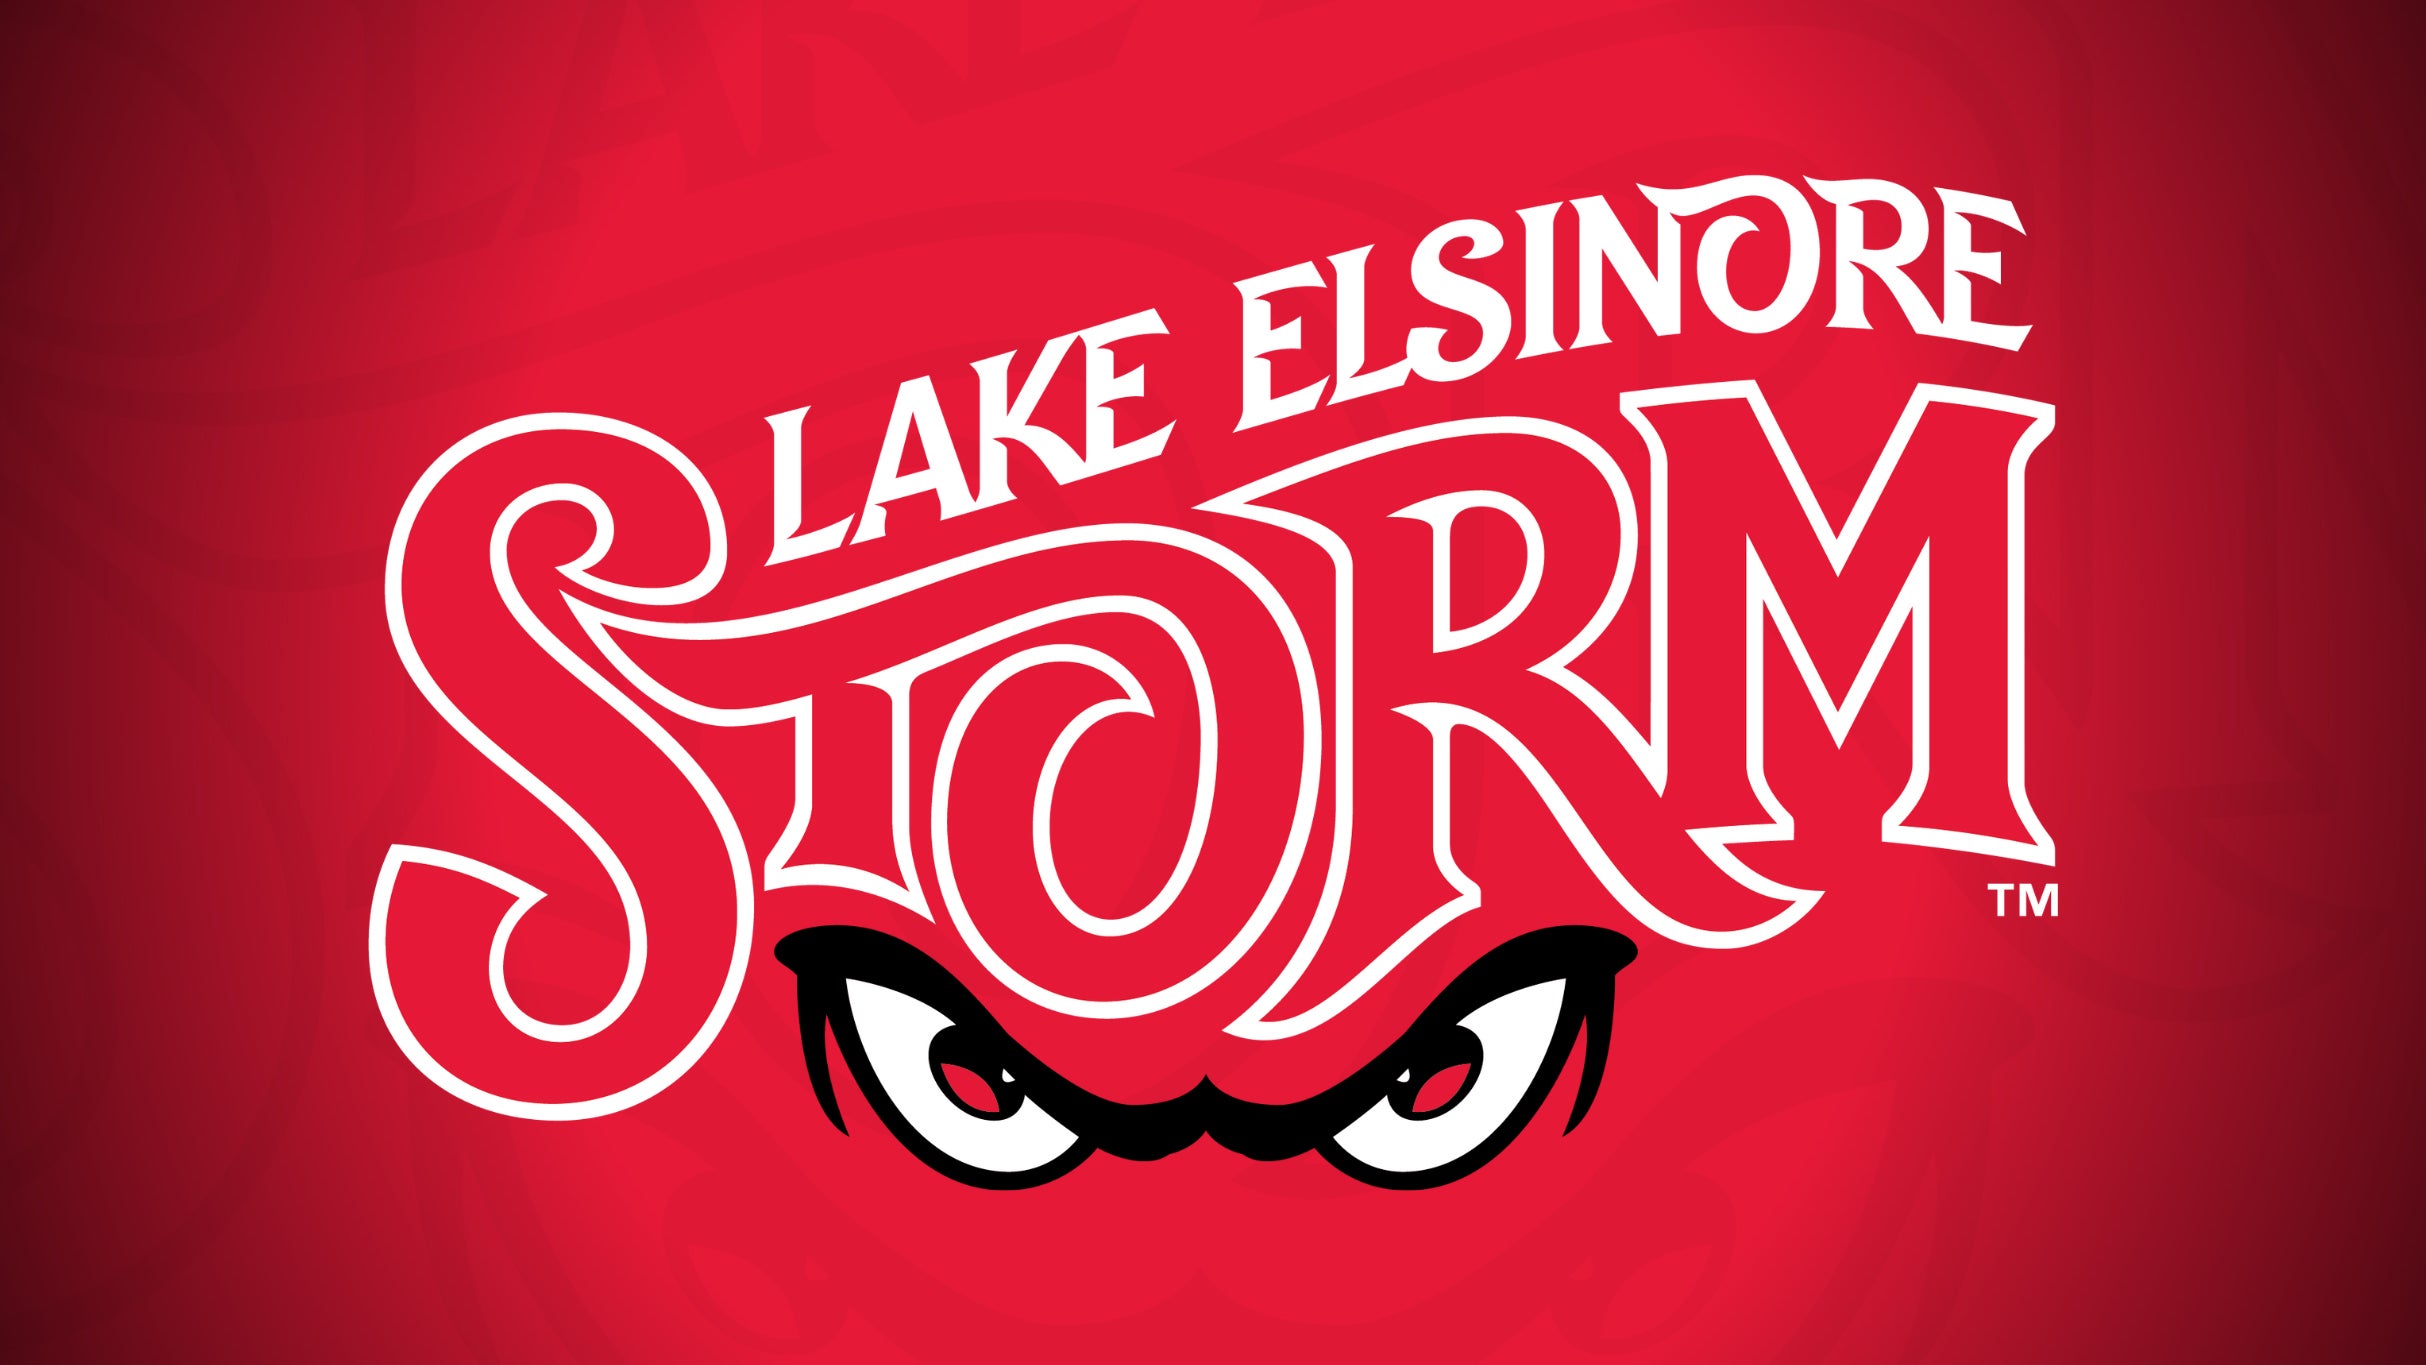 Lake Elsinore Storm vs. Fresno Grizzlies